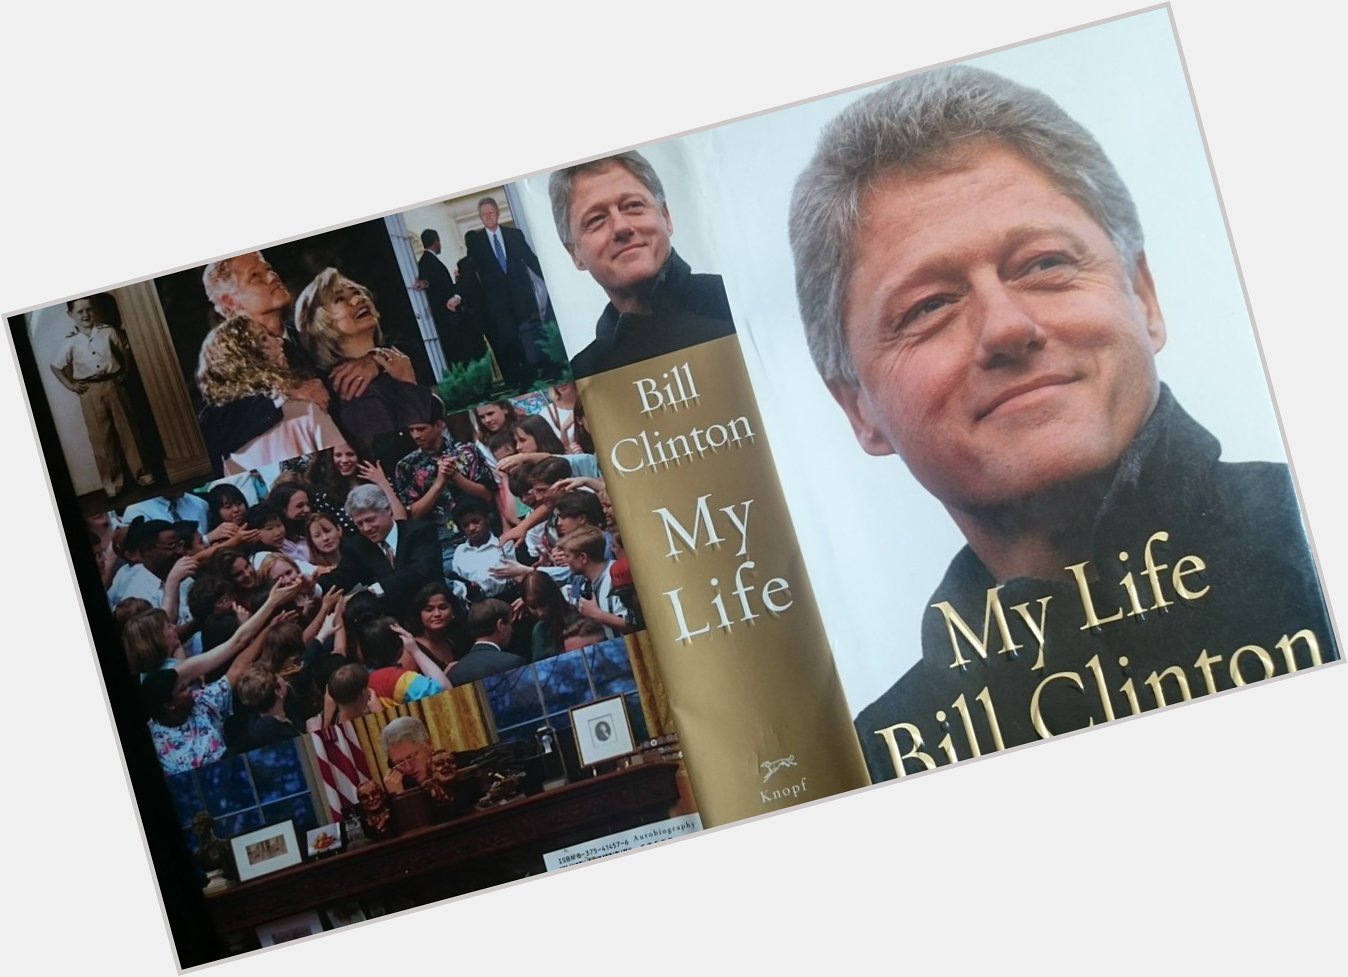 Happy birthday to you former President Bill Clinton 